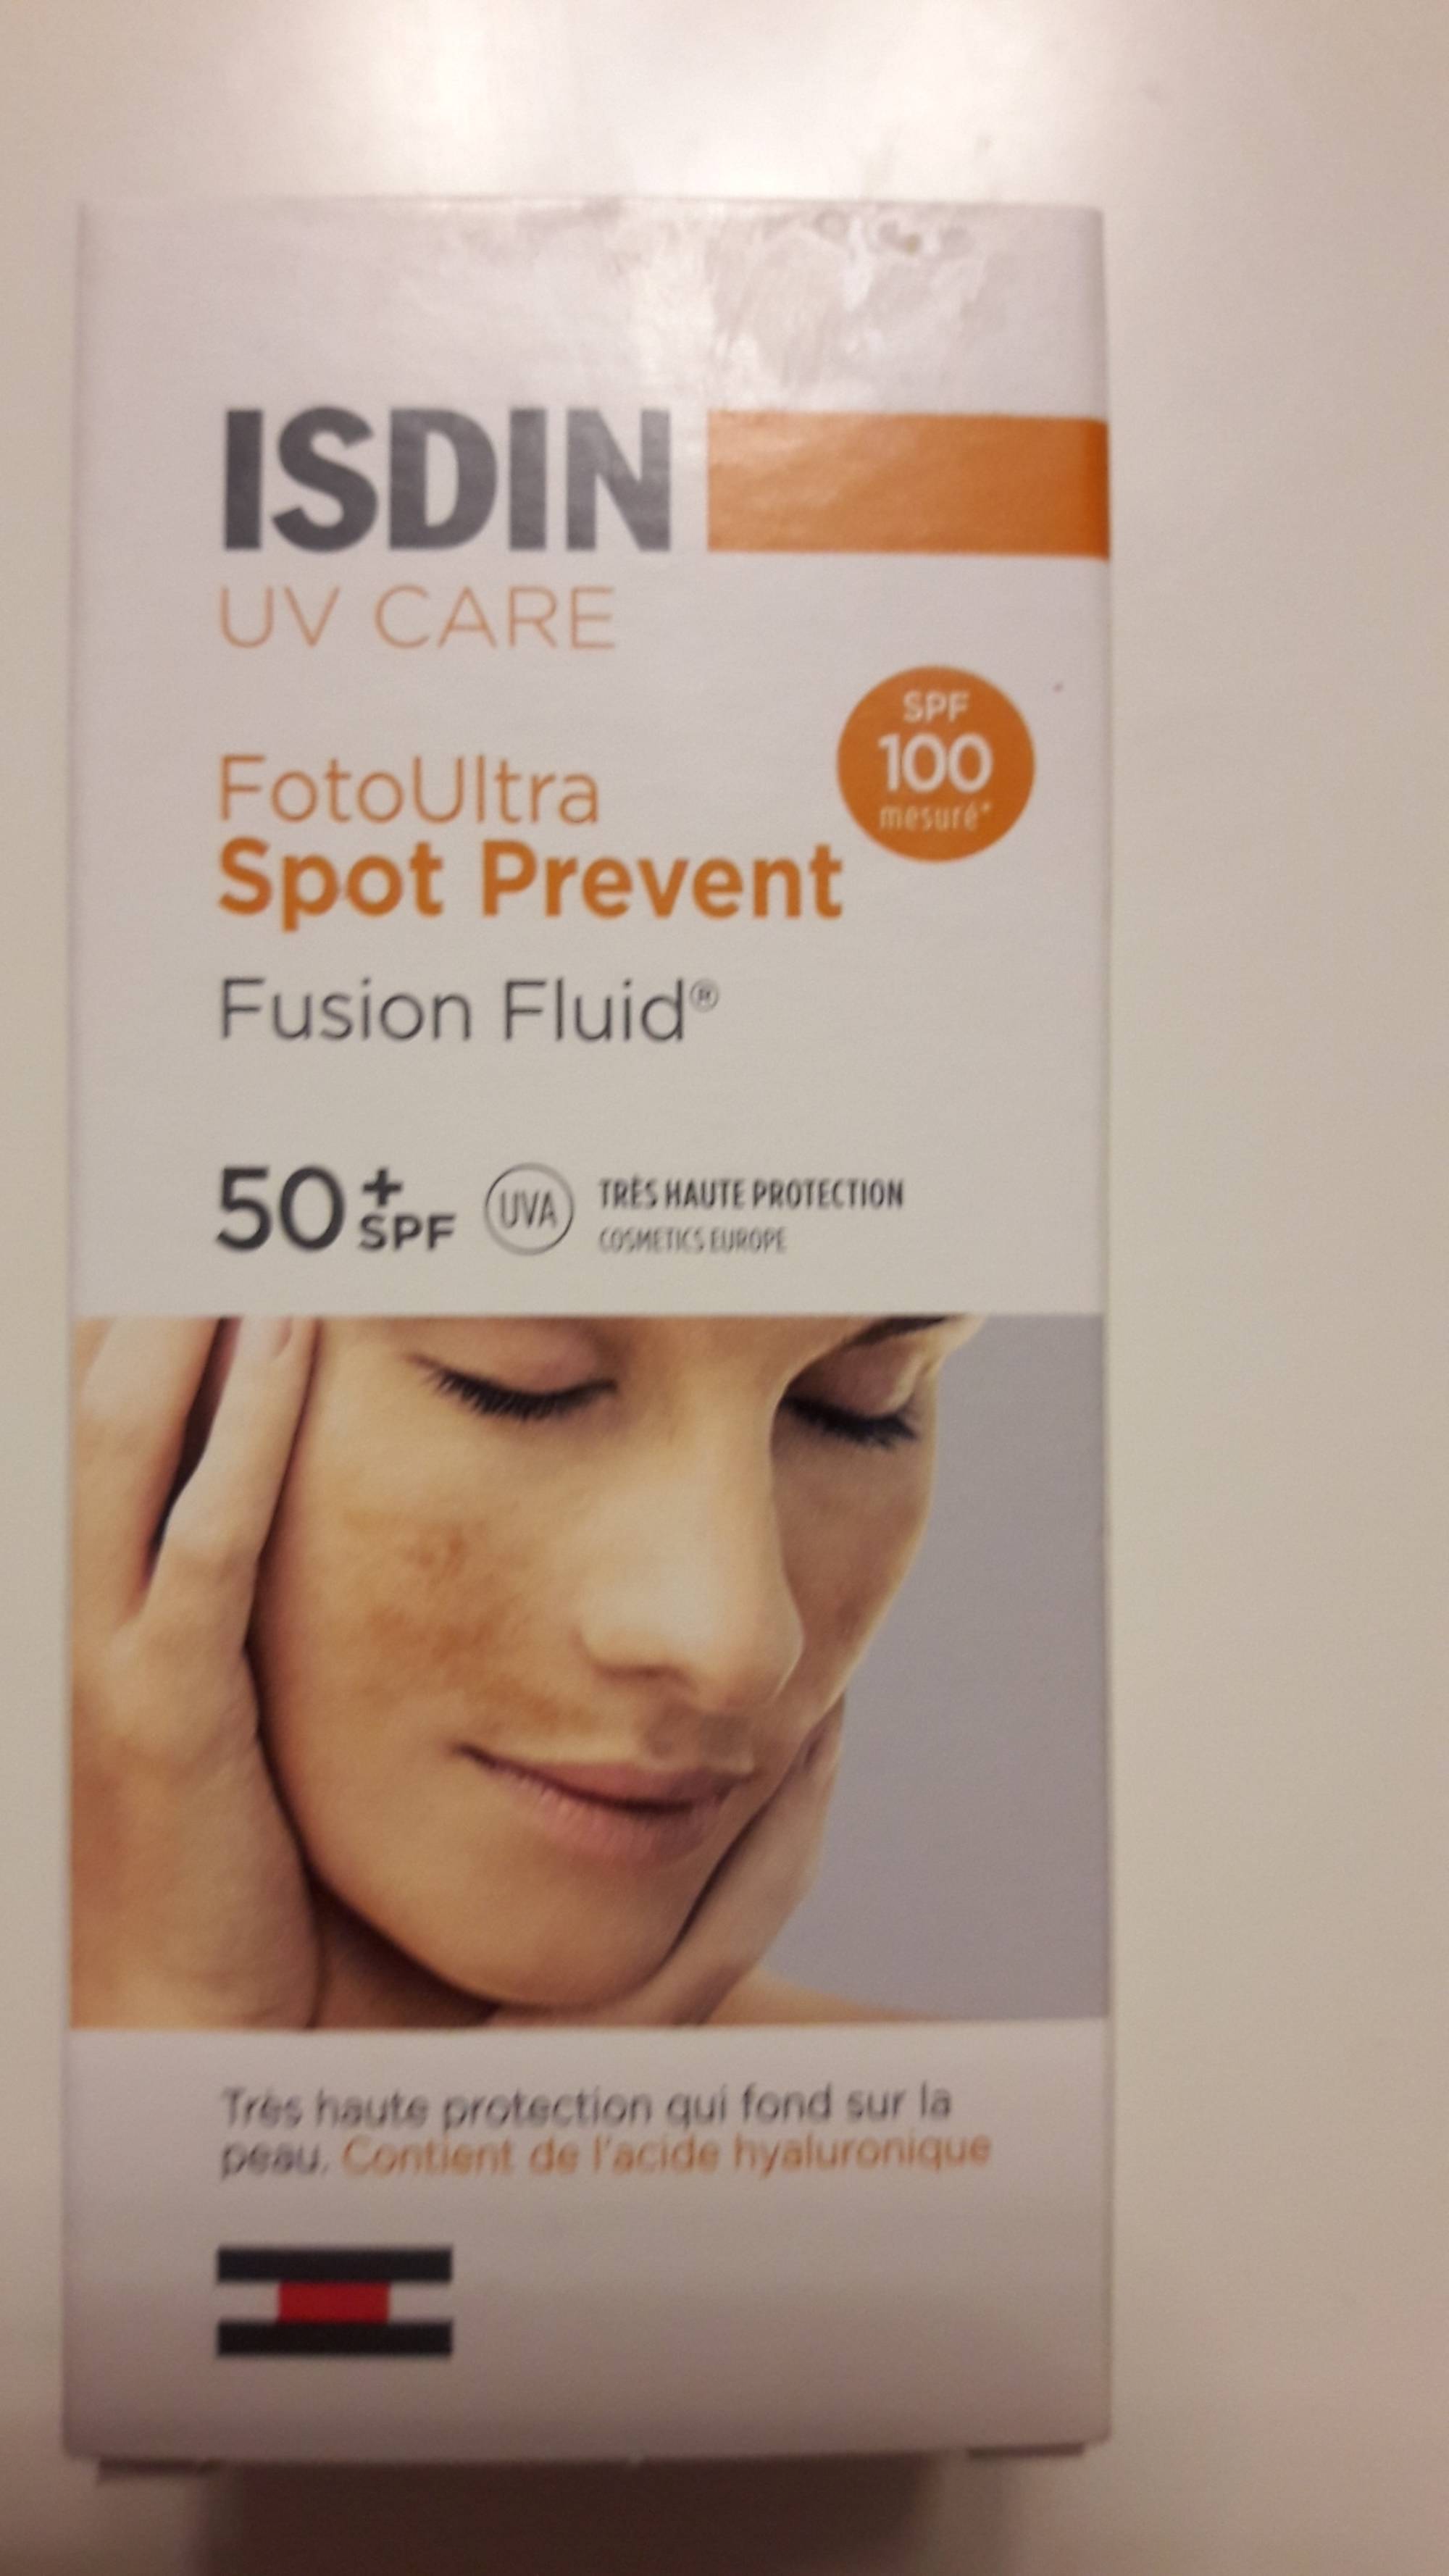 ISDIN - Foto ultra spot prevent - Fusion fluid SPF 50+